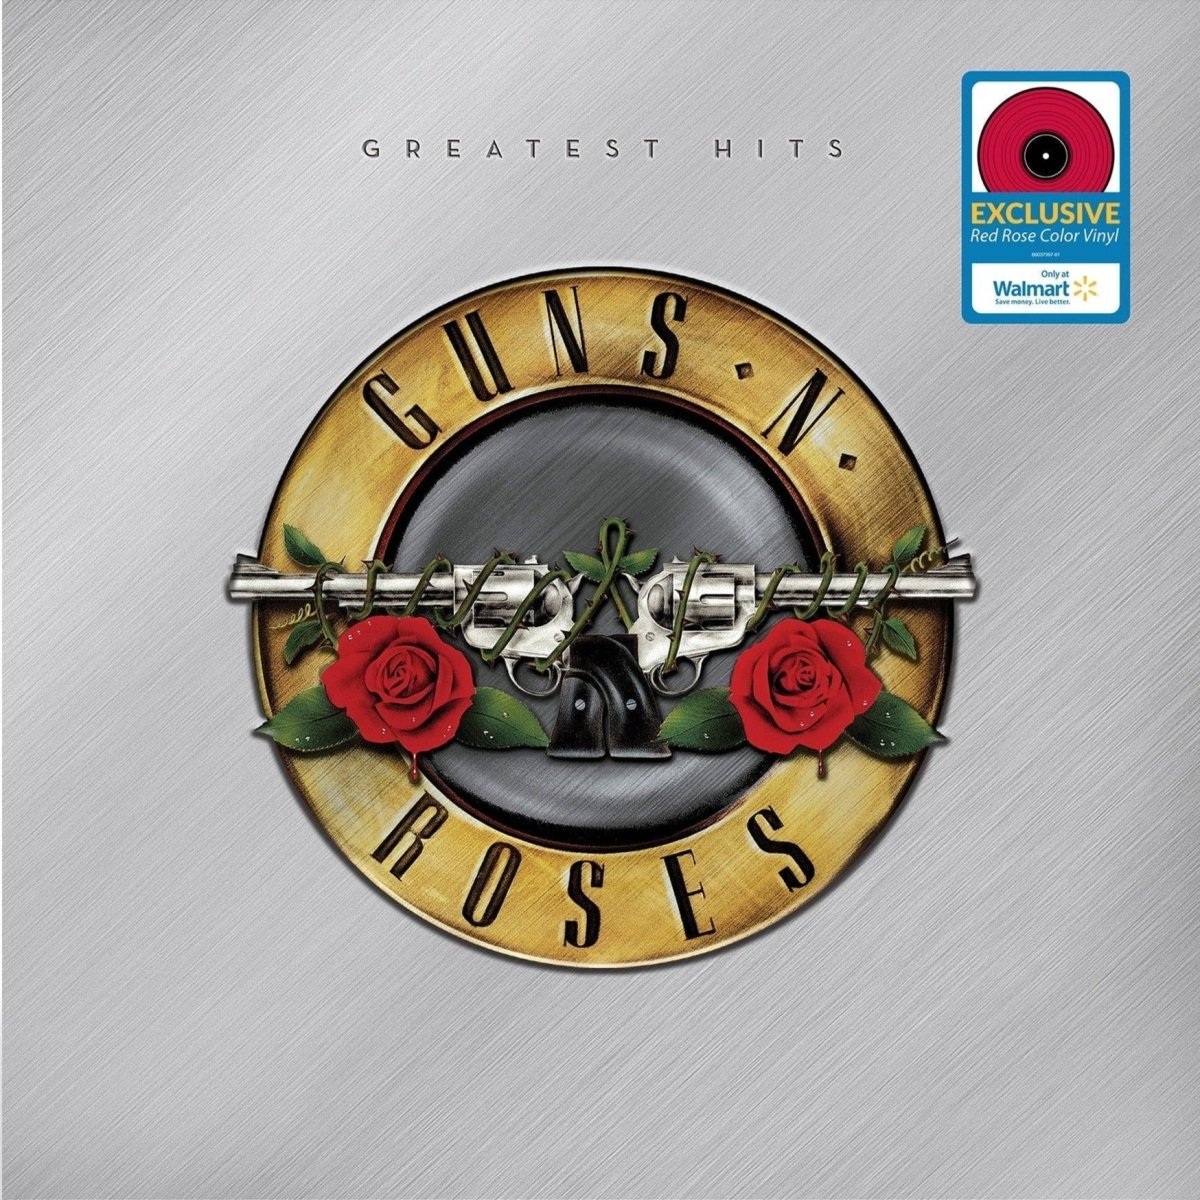 Guns N' Roses - Greatest Hits Vinyl